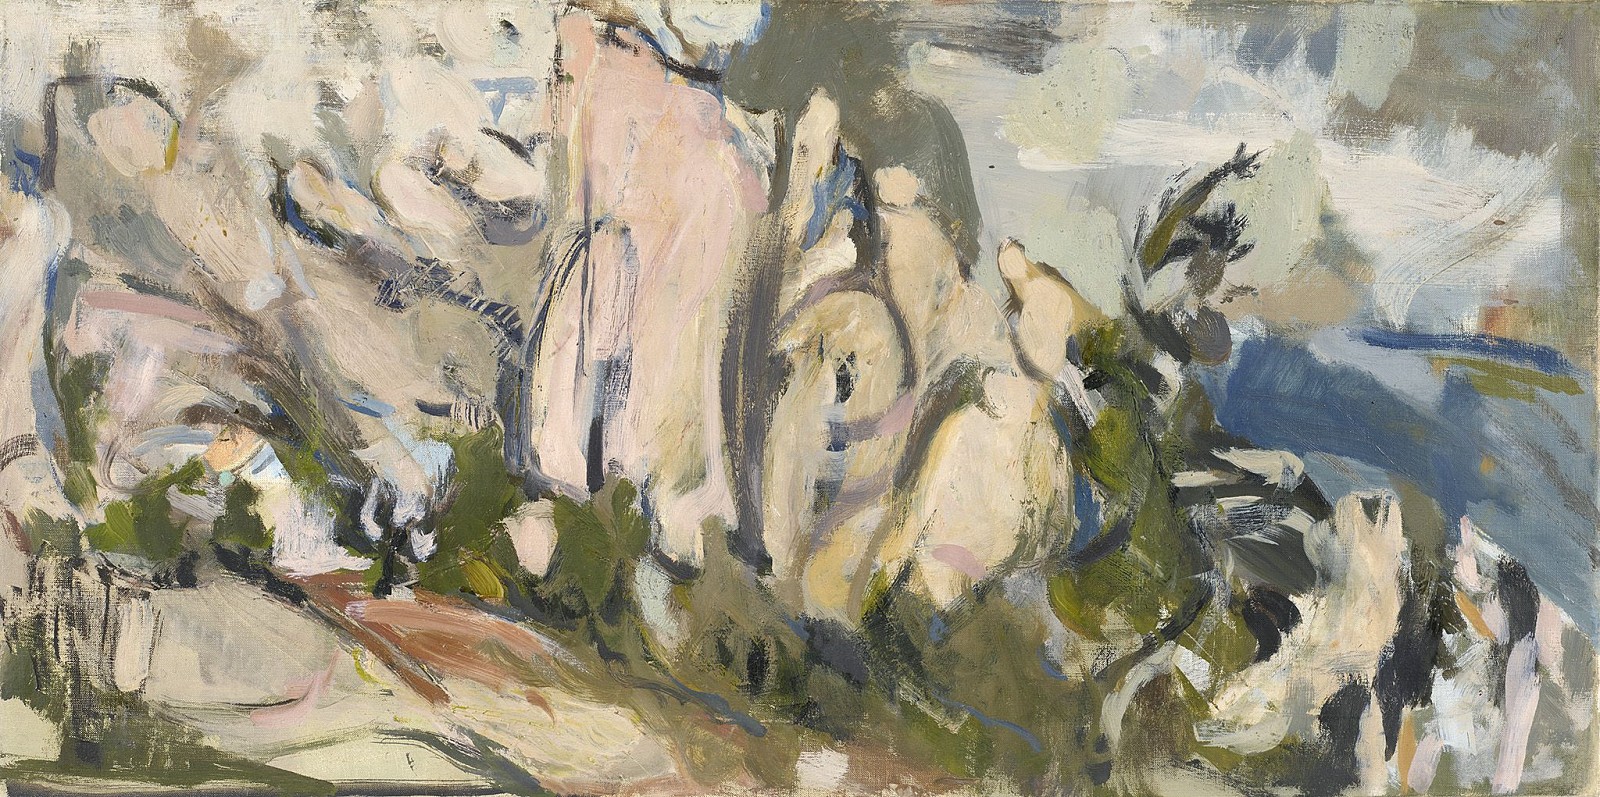 Janice Biala, Untitled (Cézanne Landscape), c. 1952
Oil on canvas, 13 3/4 x 31 1/3 in. (34.9 x 79.6 cm)
BIAL-00037